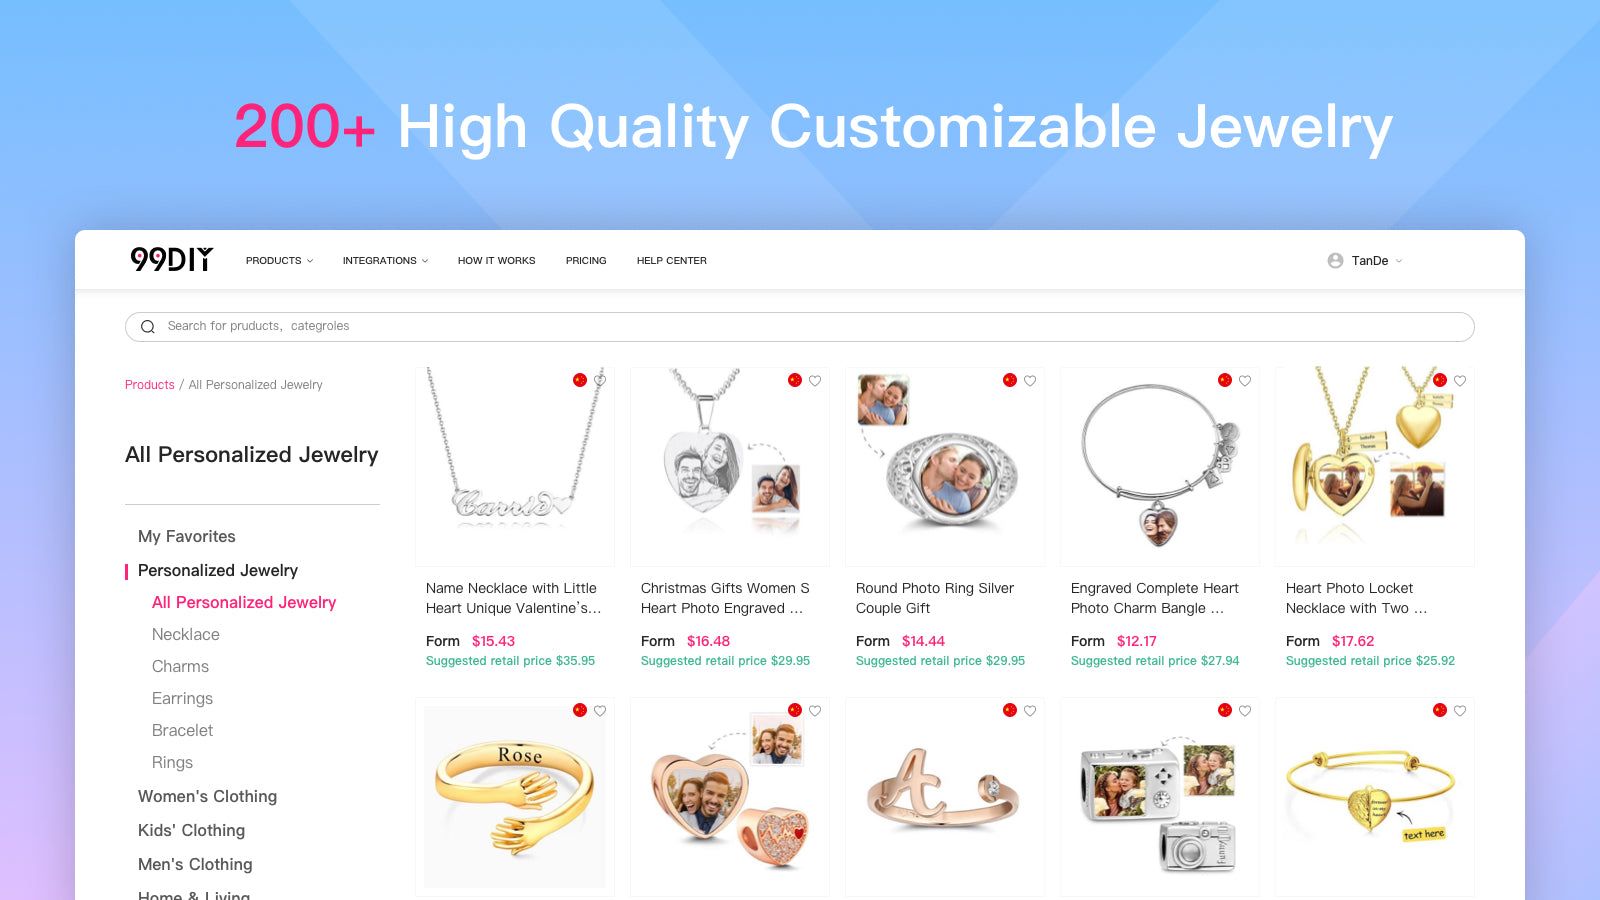 200+ High Quality Customizable Jewelry